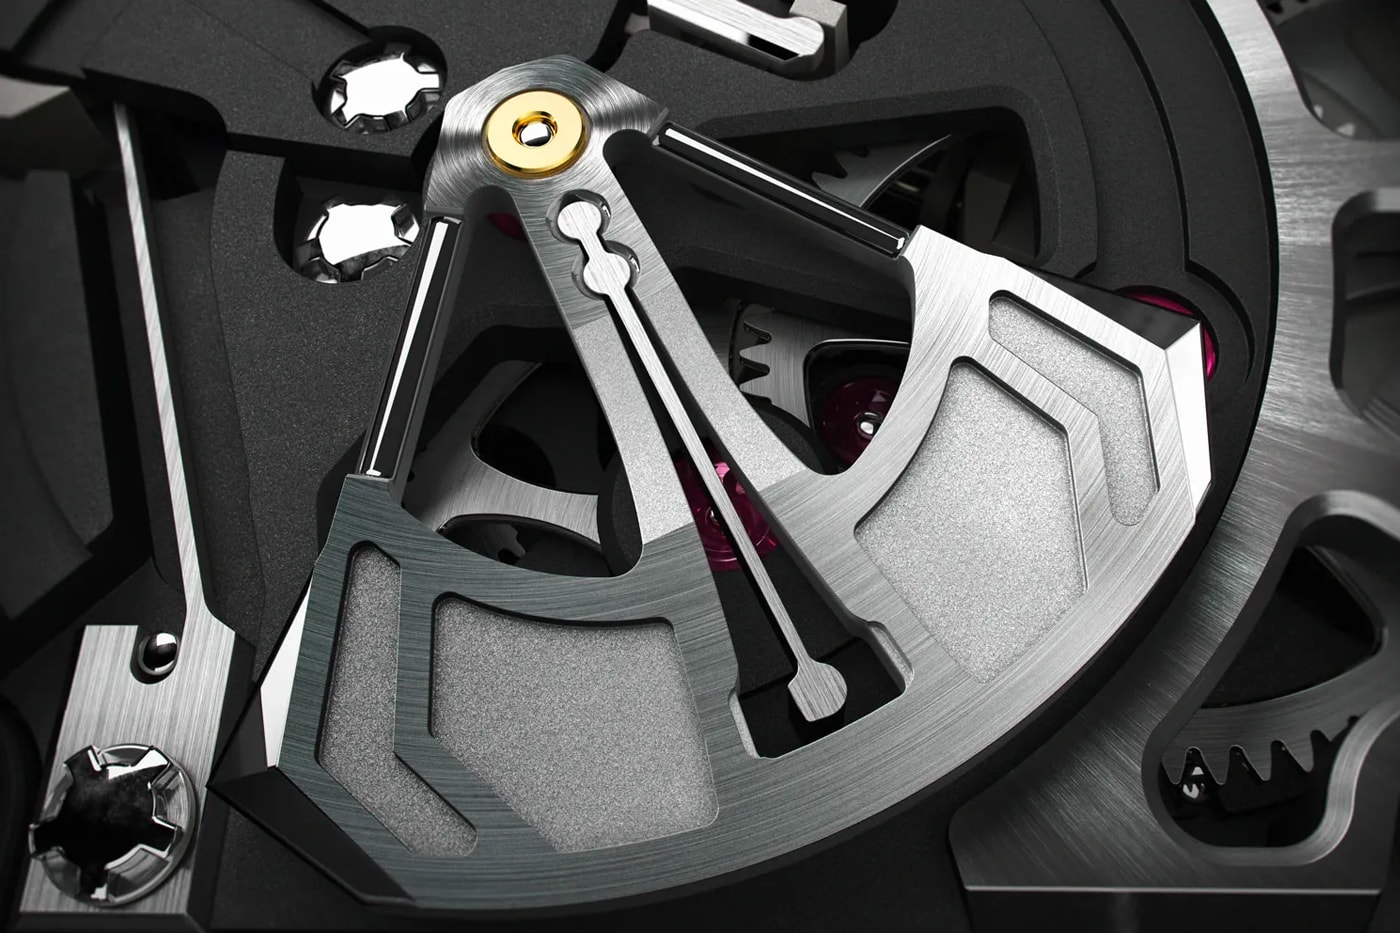 Richard Mille RM 62-01 Tourbillon Vibrating Alarm swiss watch AP luxury Airbus Corporate Jets carbon titanium engineering watchmaking 